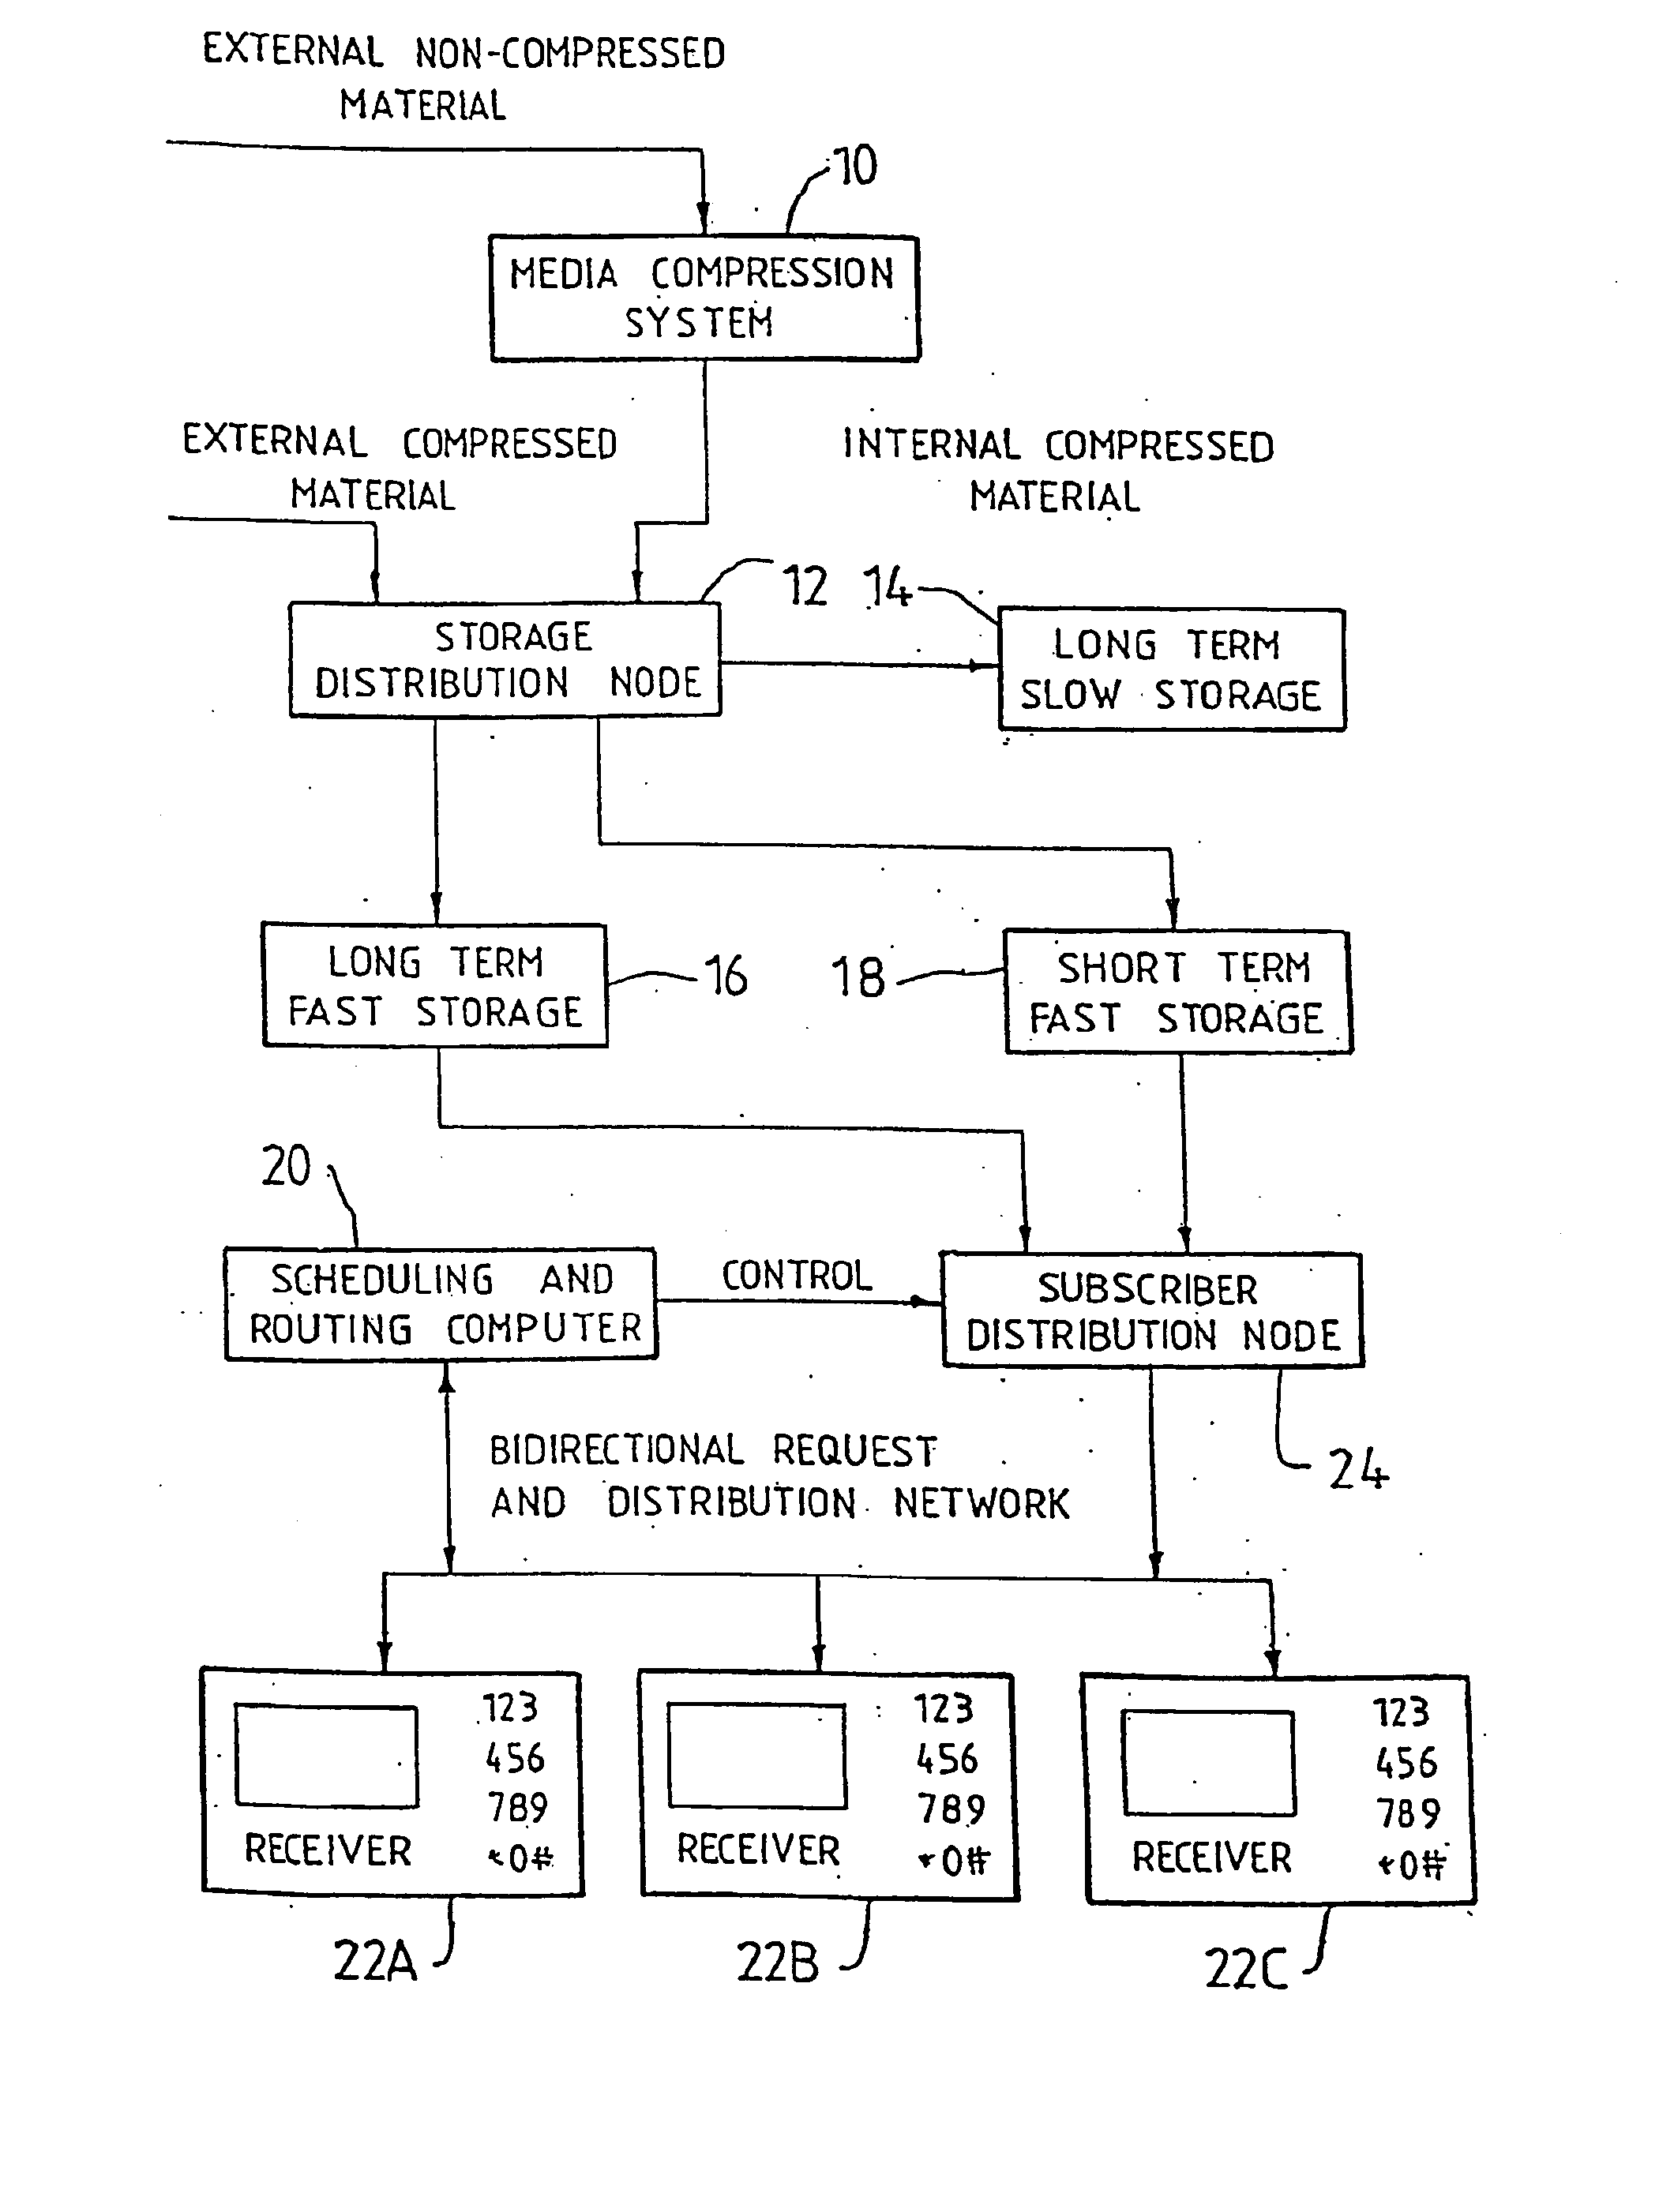 Method and system of program transmission optimization using a redundant transmission sequence